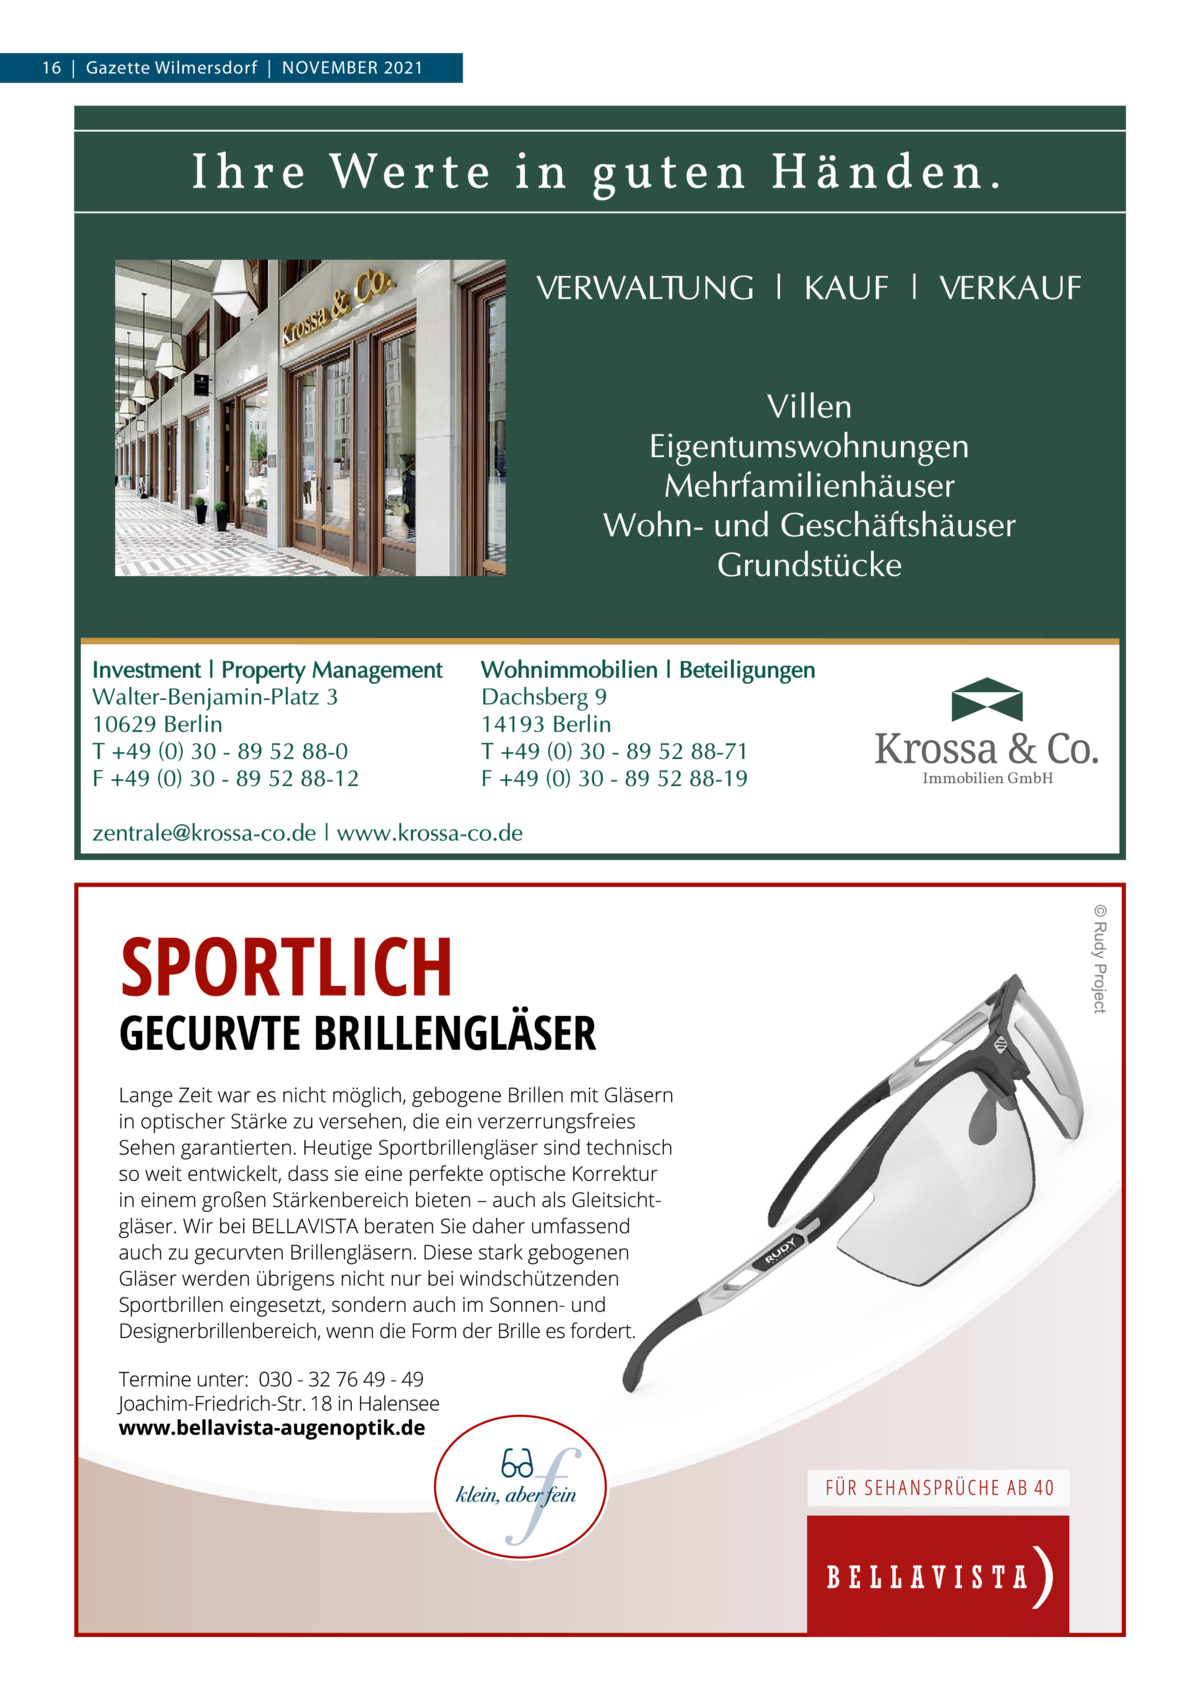 16  |  Gazette Wilmersdorf  |  November 2021  Immobilien GmbH